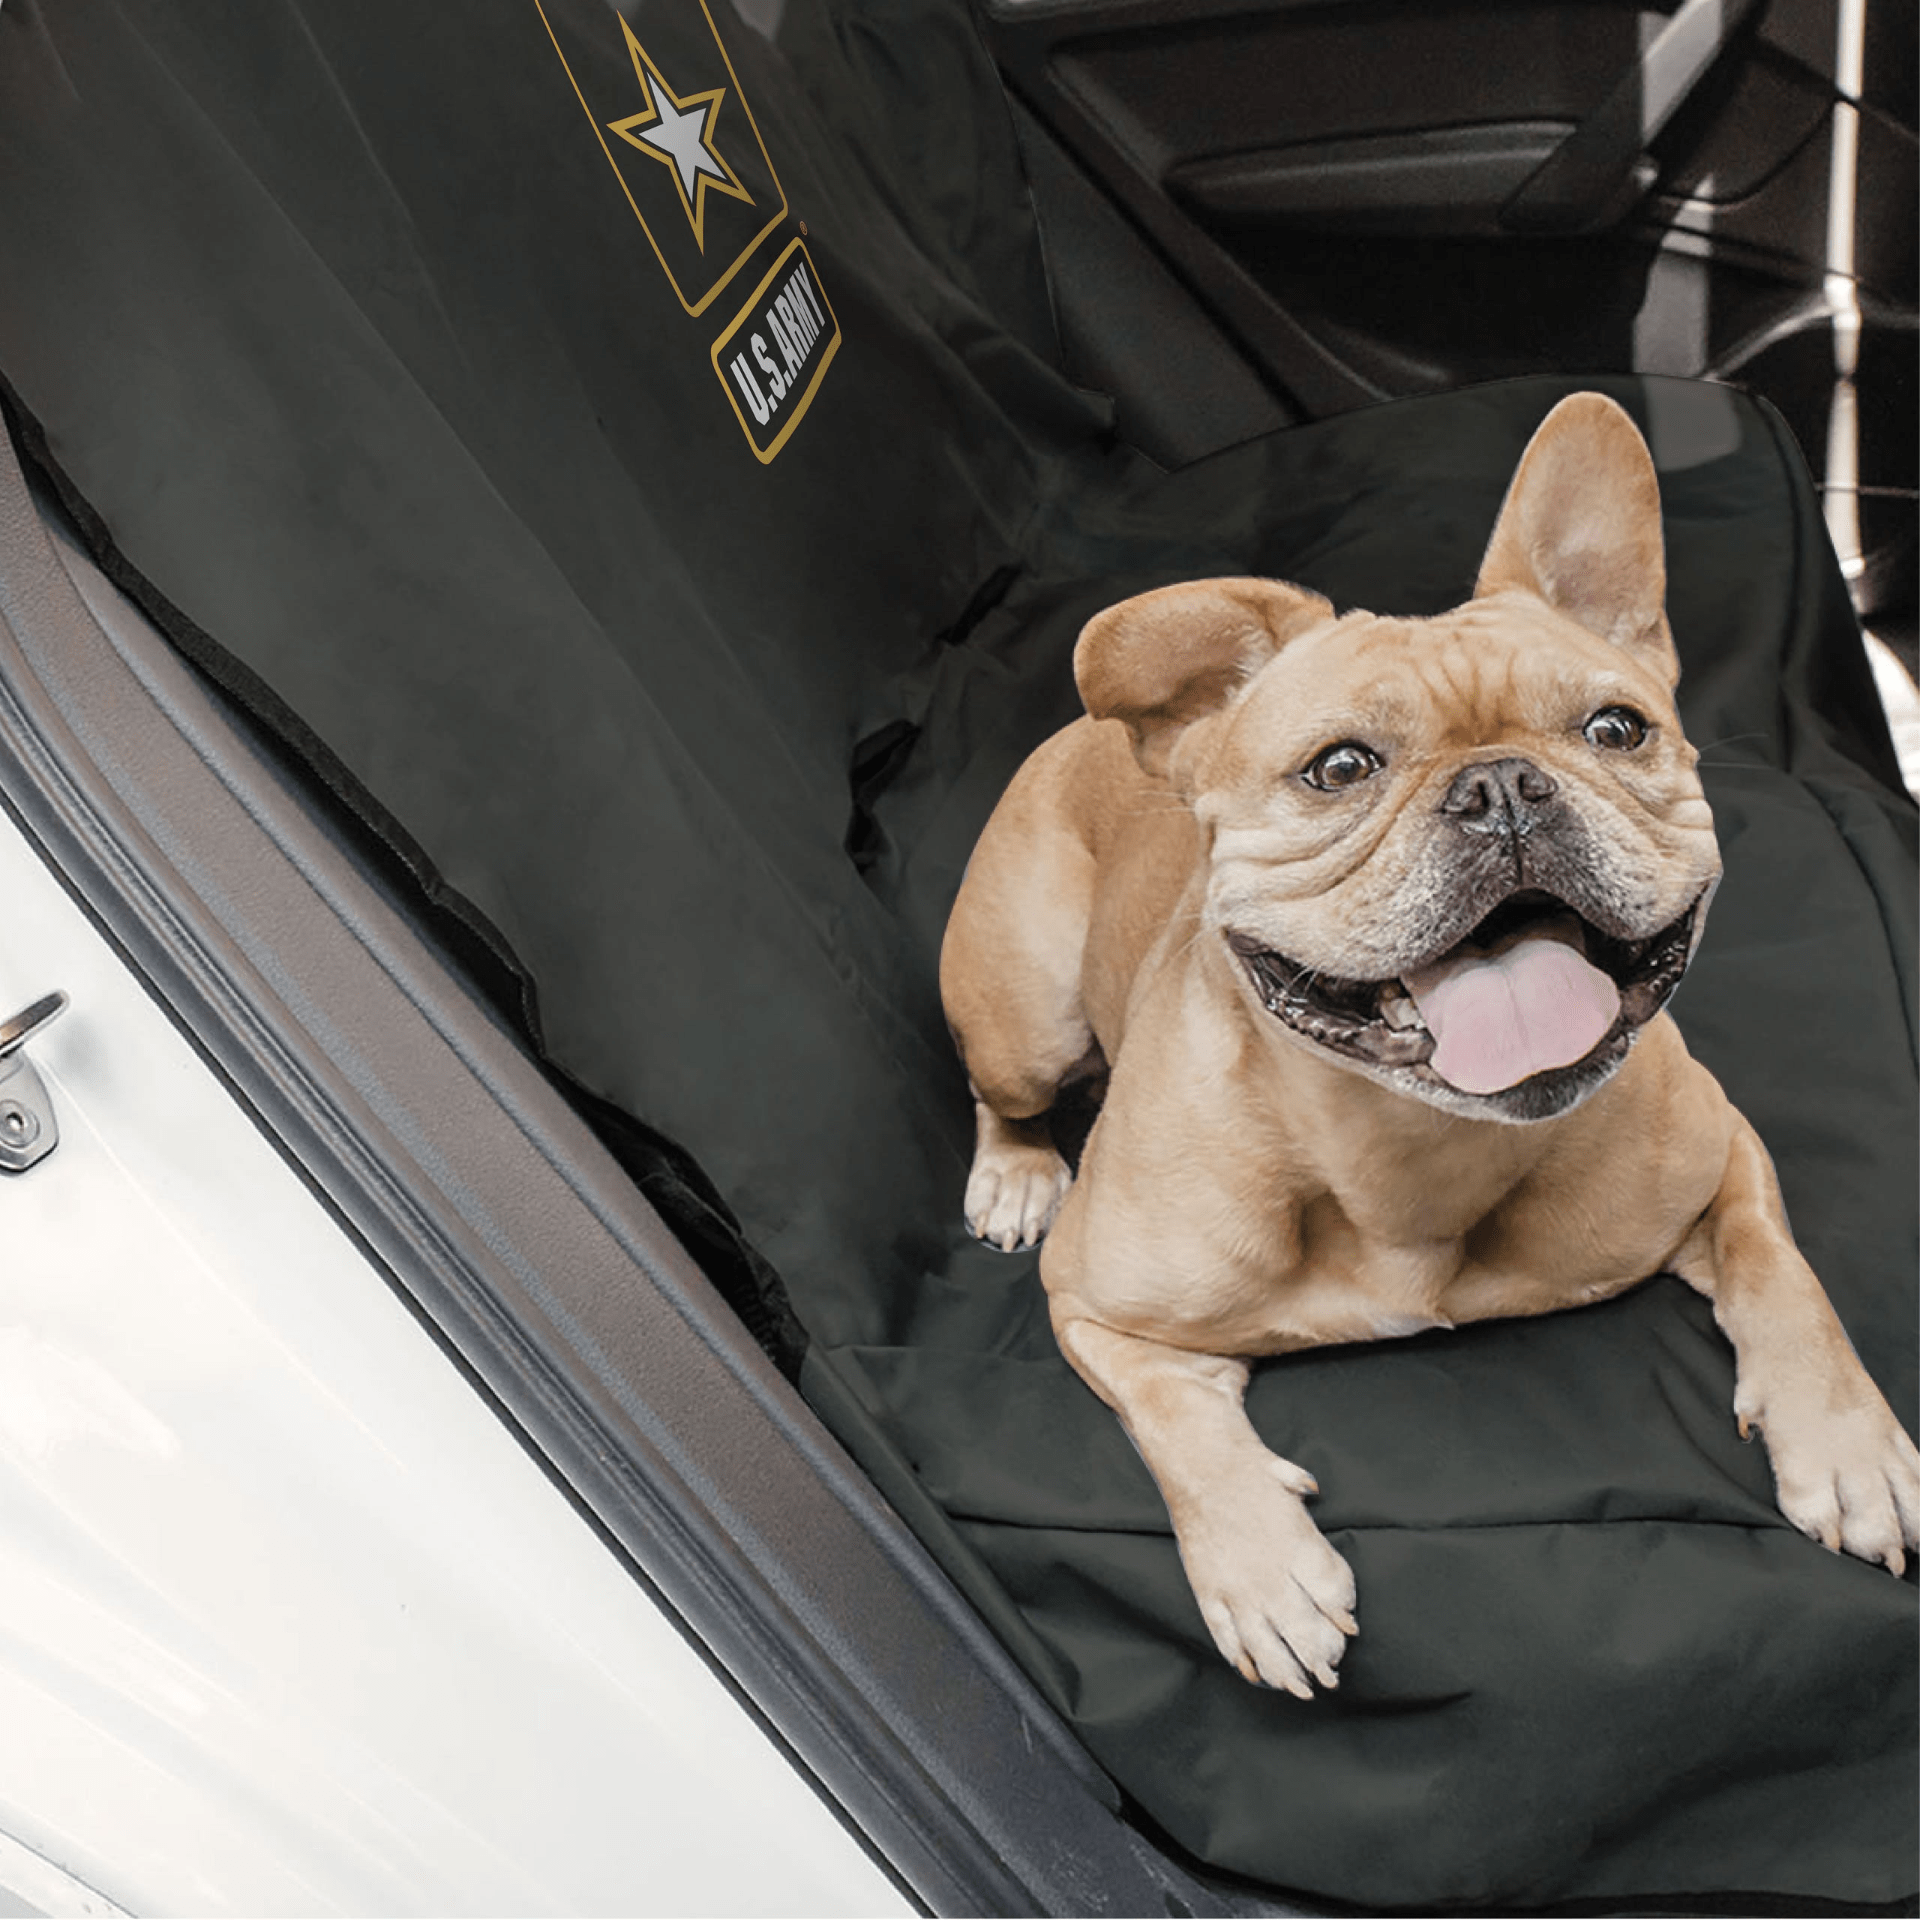 Dog and Pet Stuff US Army Car Bench Seat Pet Cover - Dark Camo